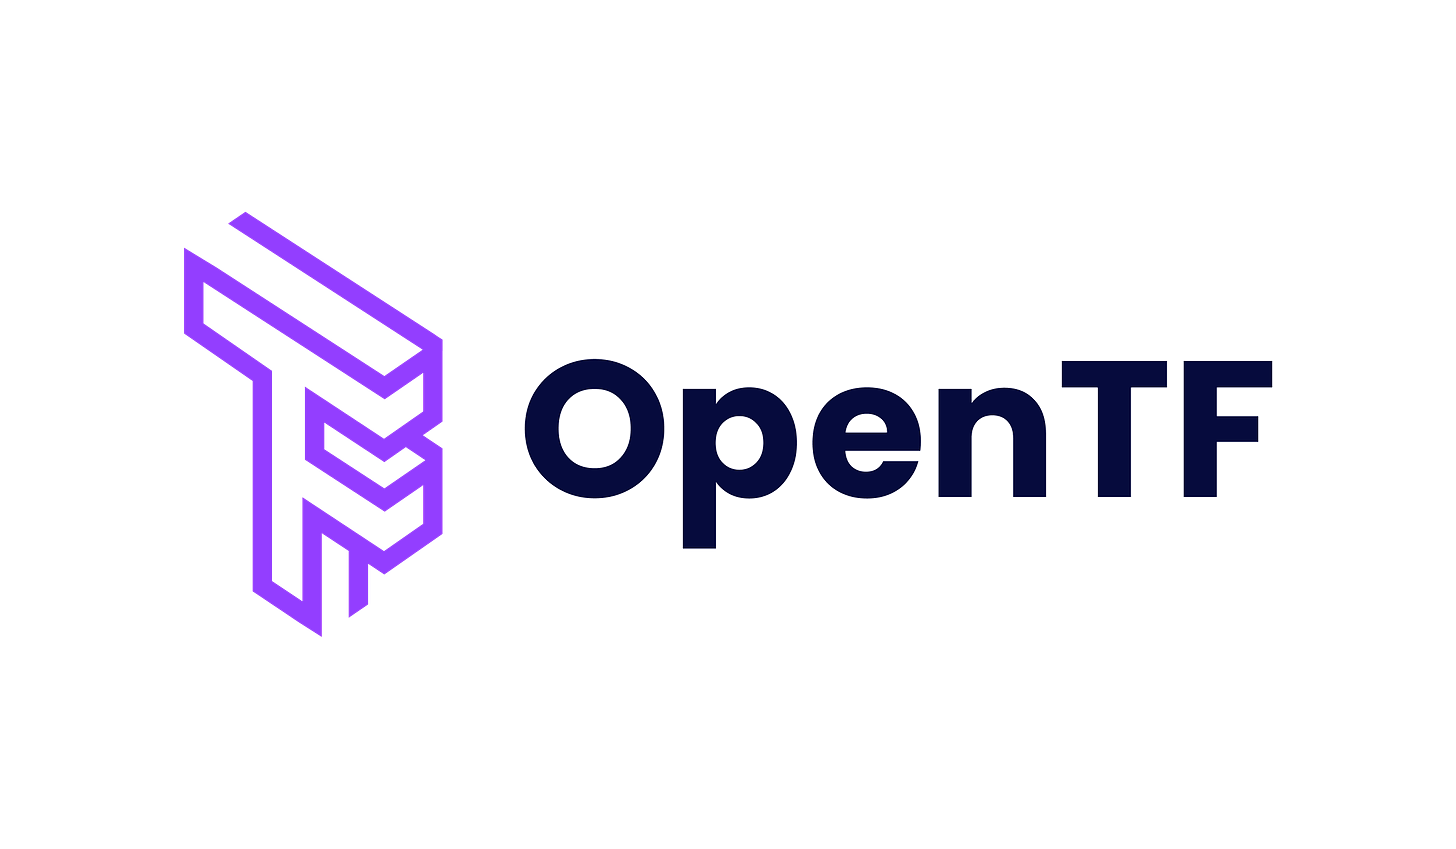 OpenTF Foundation